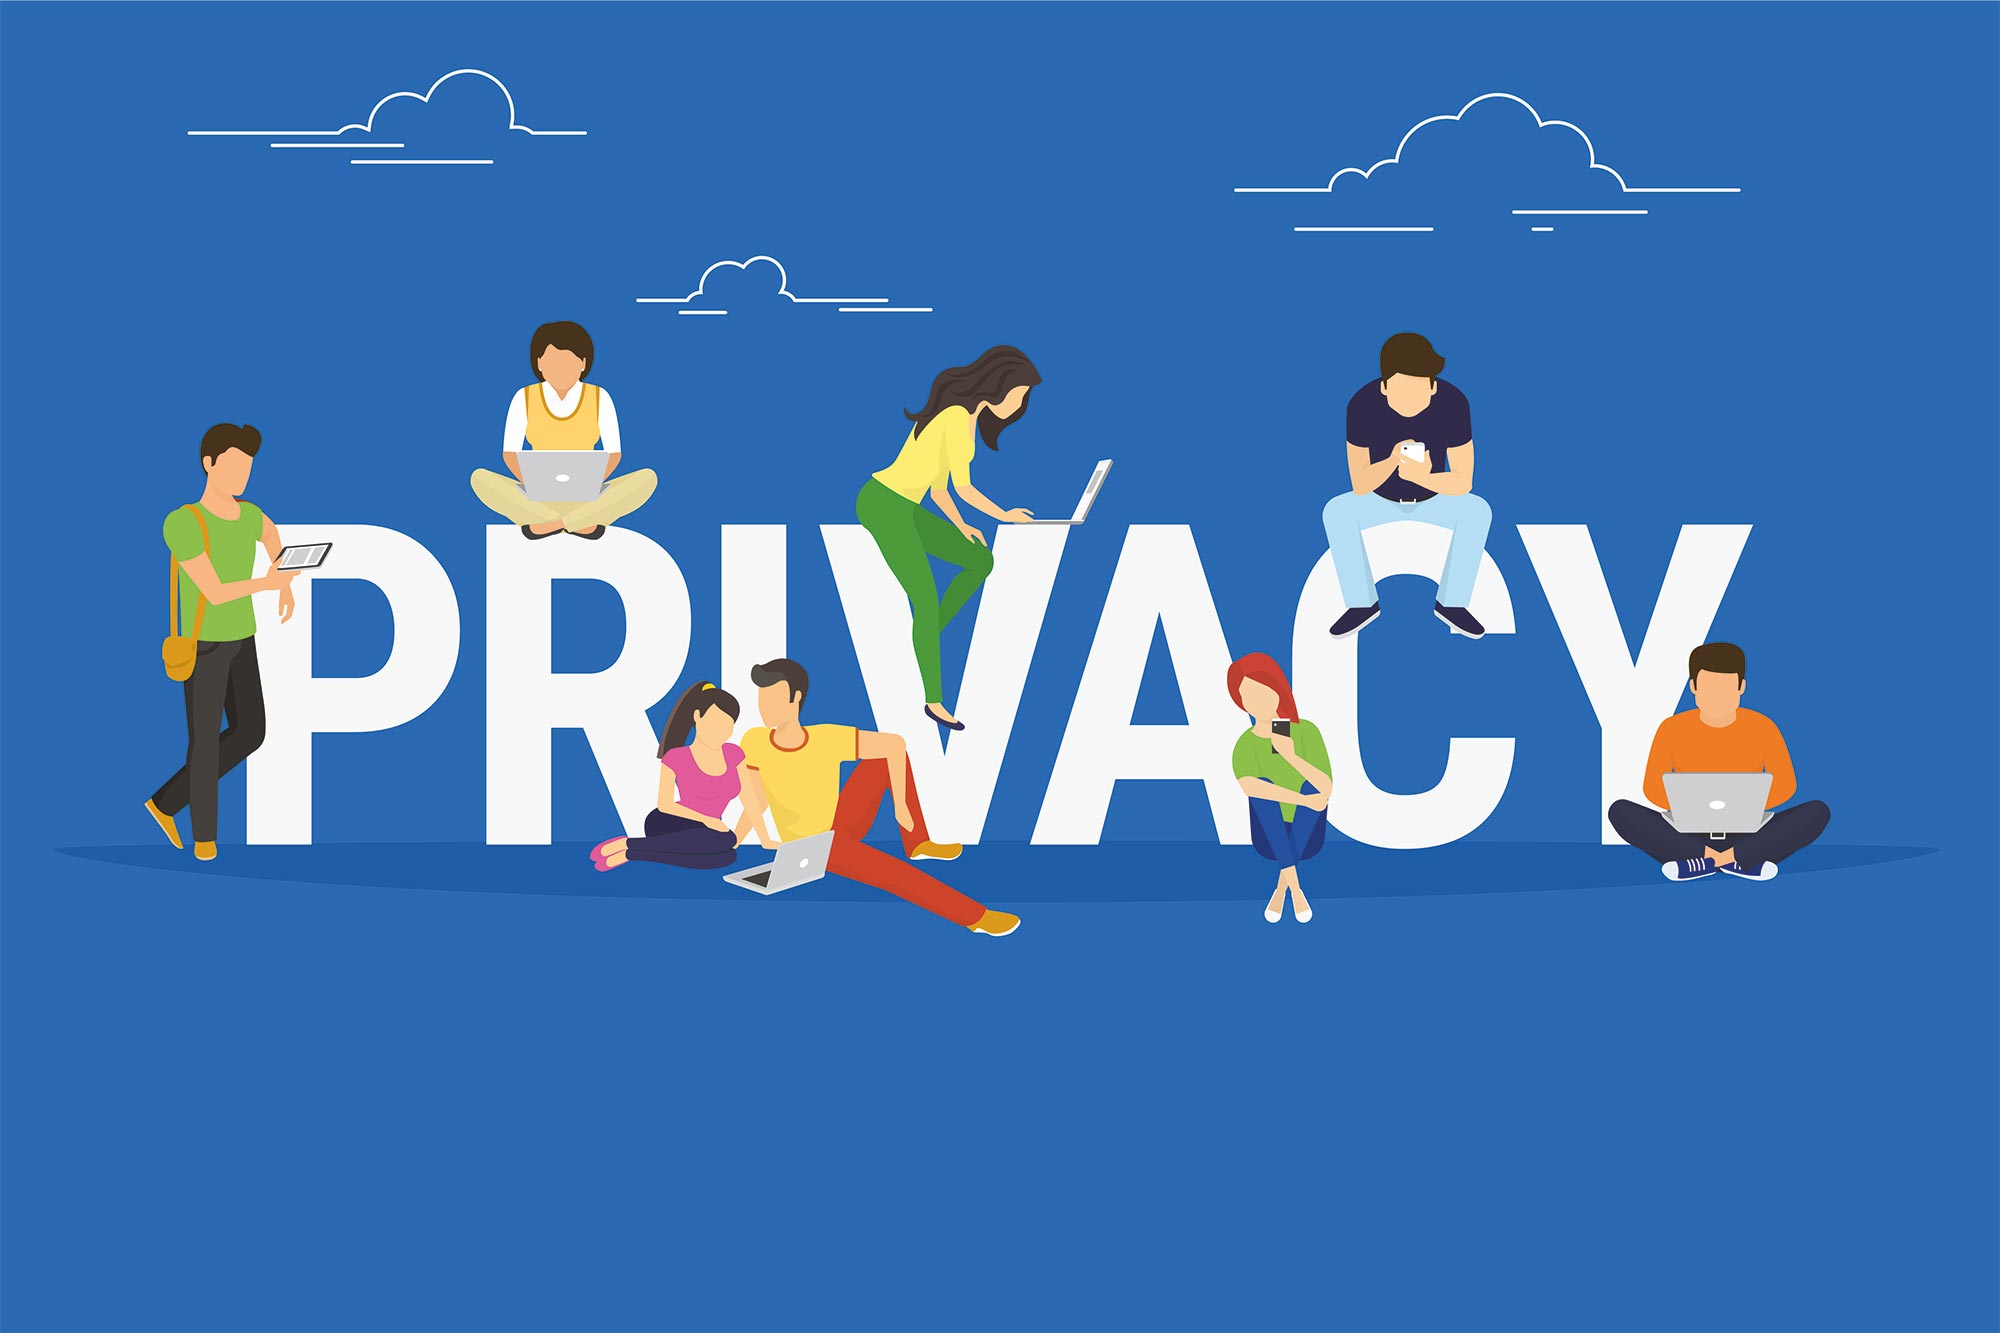 consumer-privacy-concept-illustration.jpg